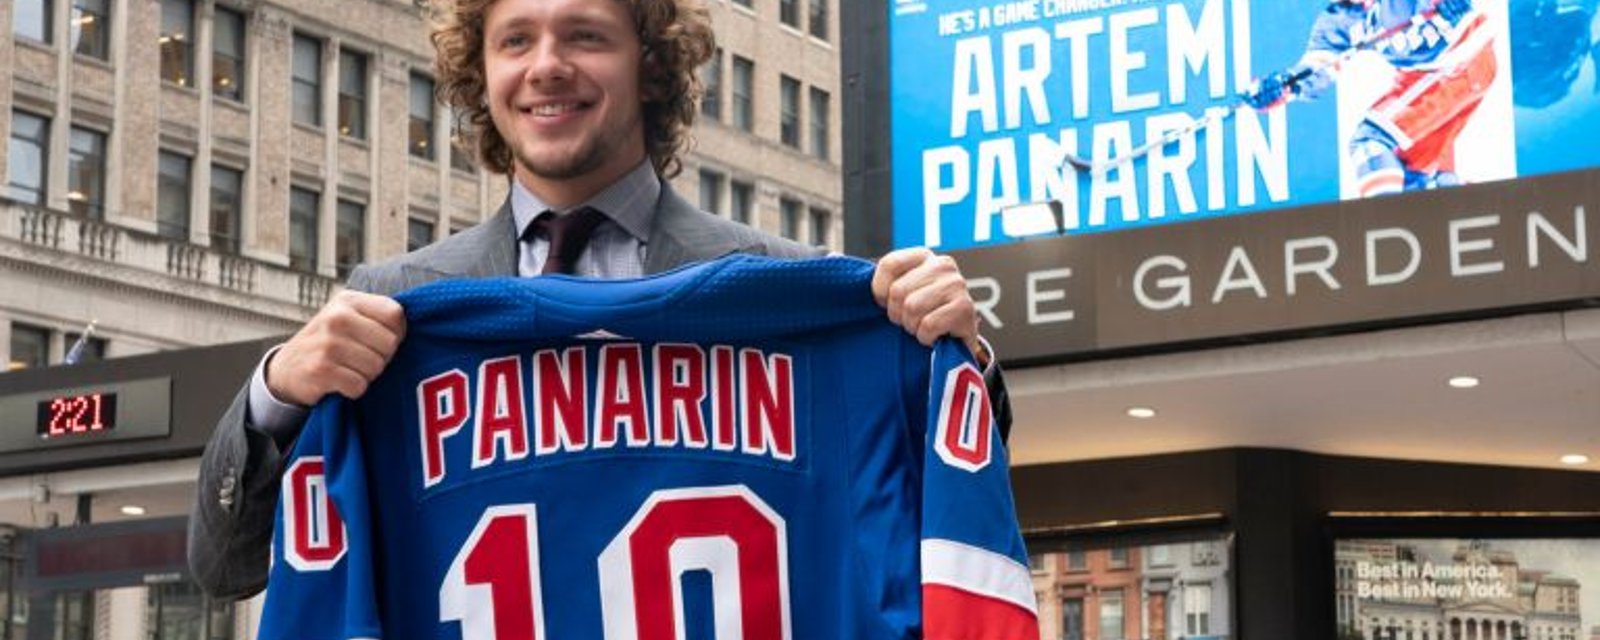 Artemi Panarin quitte les Rangers